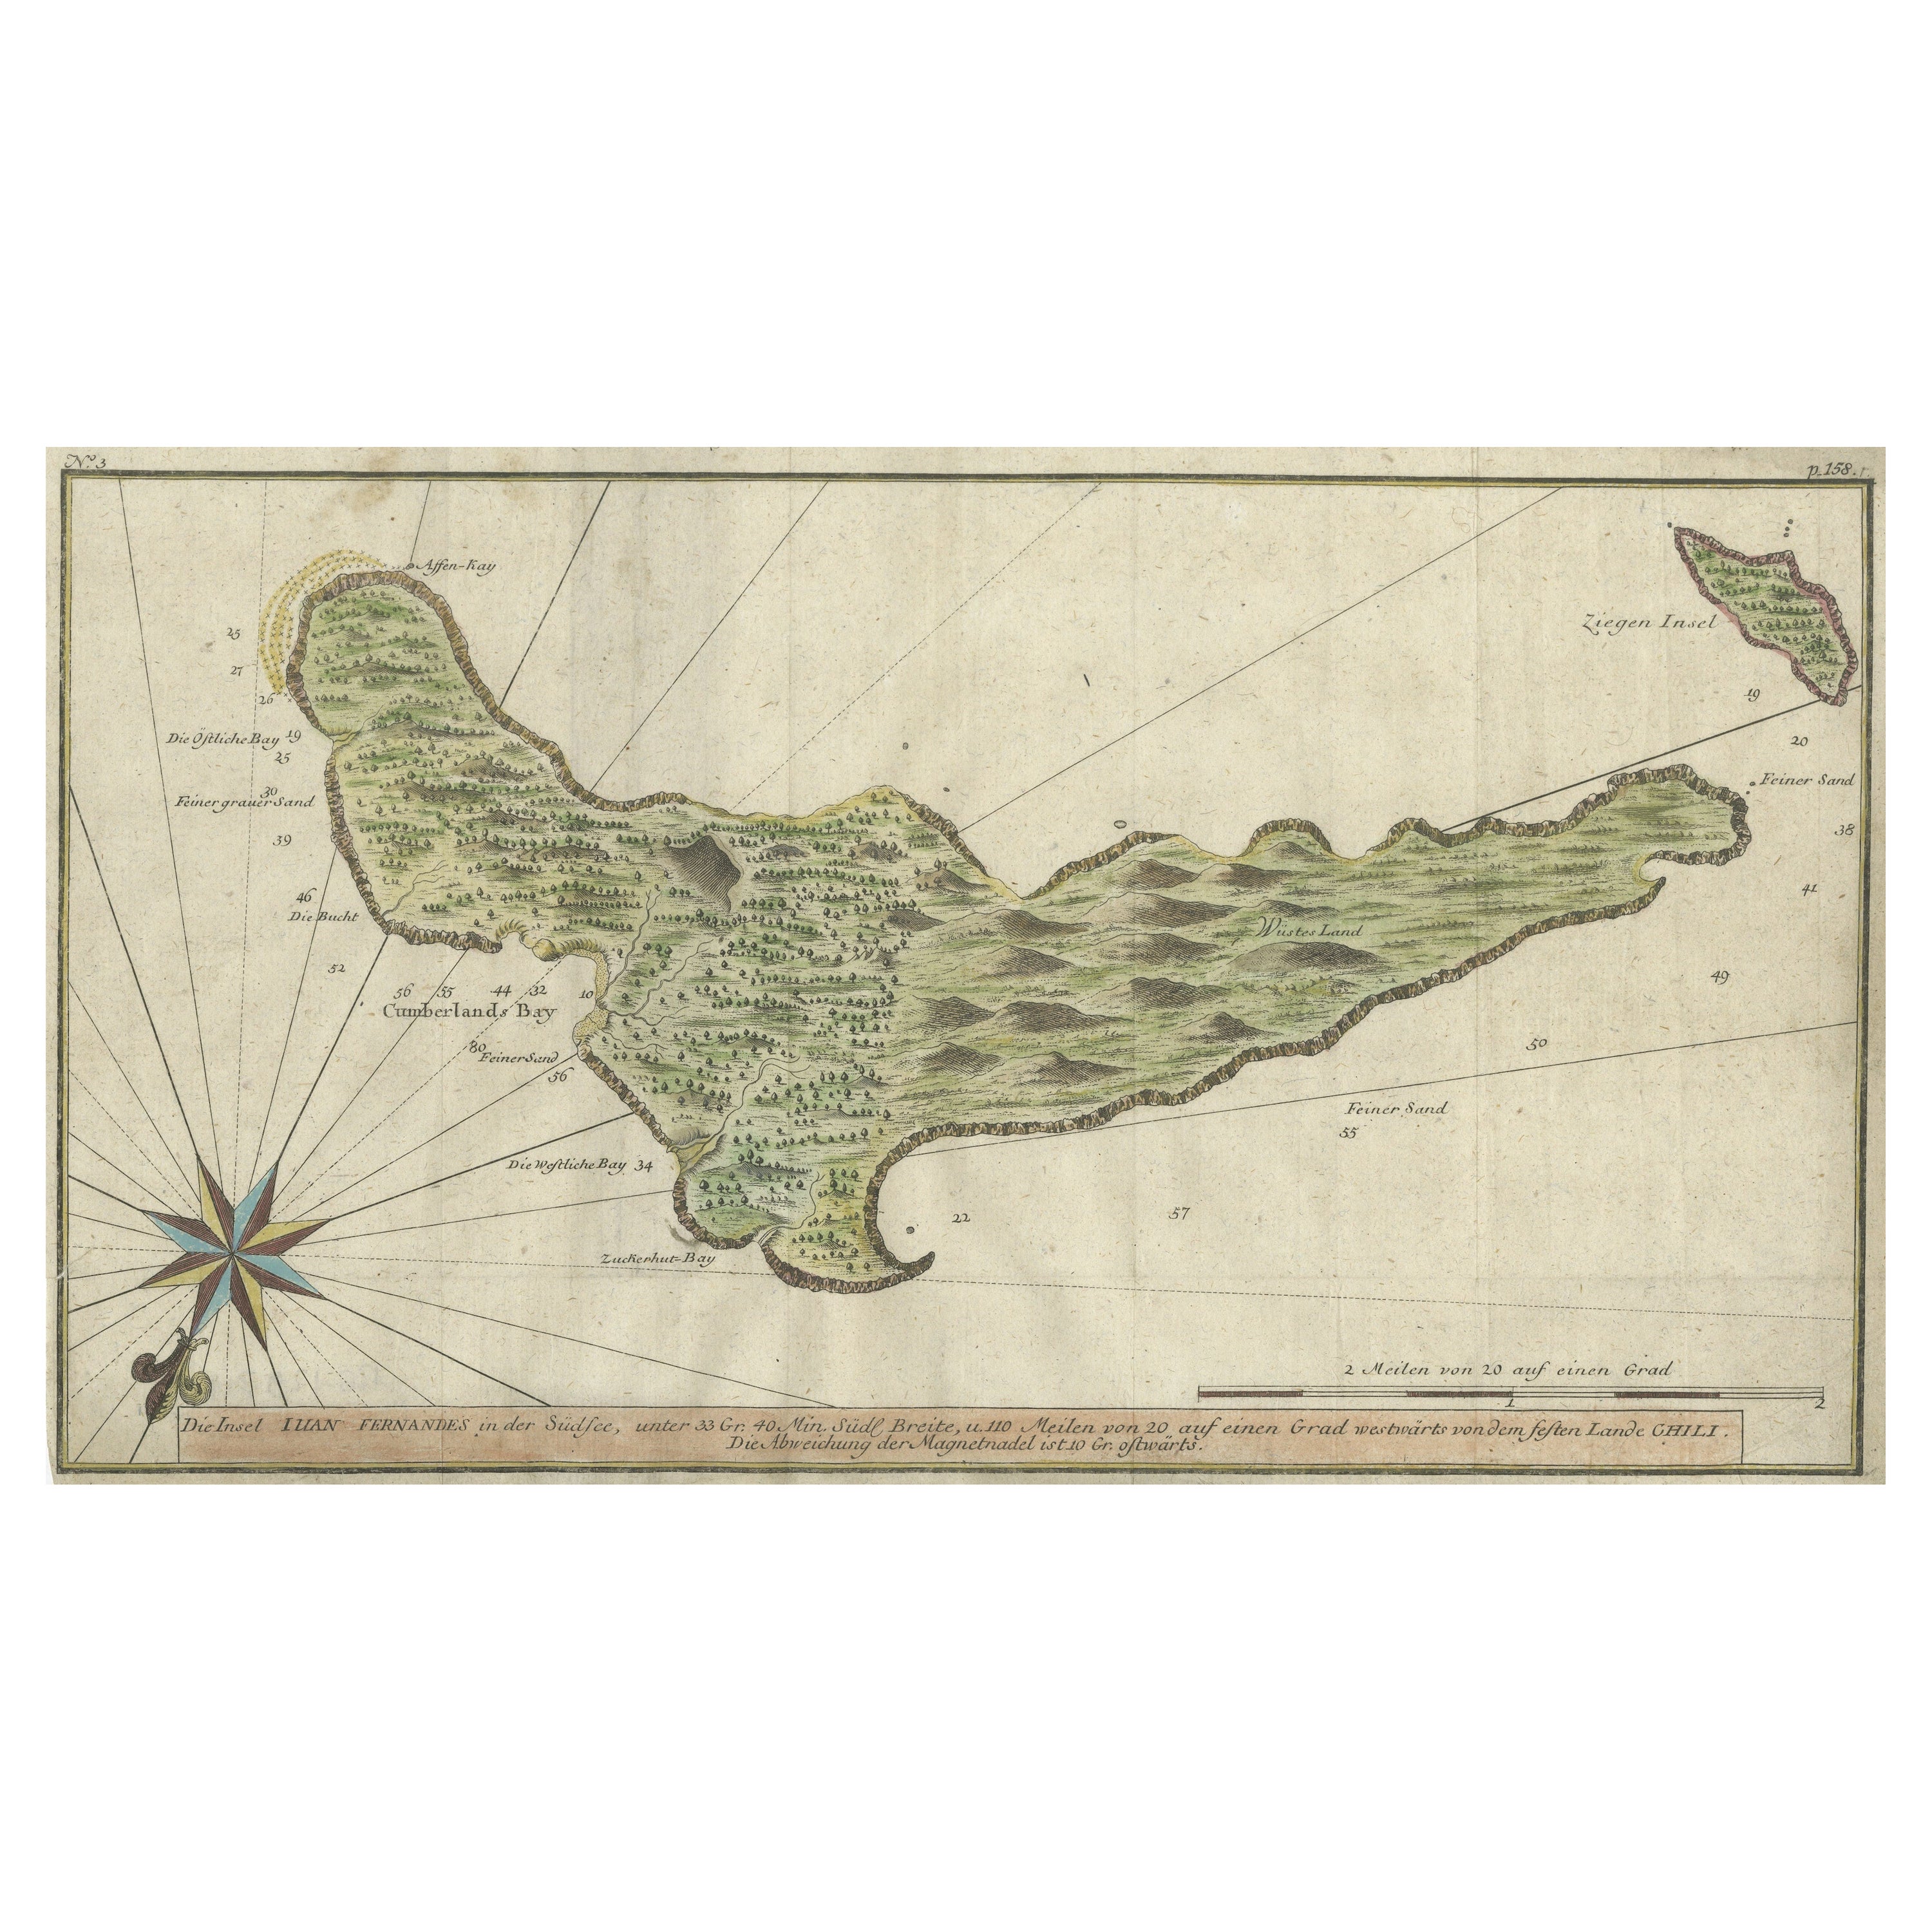 Rare carte colorée à la main de l'île de Juan Fernandes « Robinson Crusoe Island », Chili